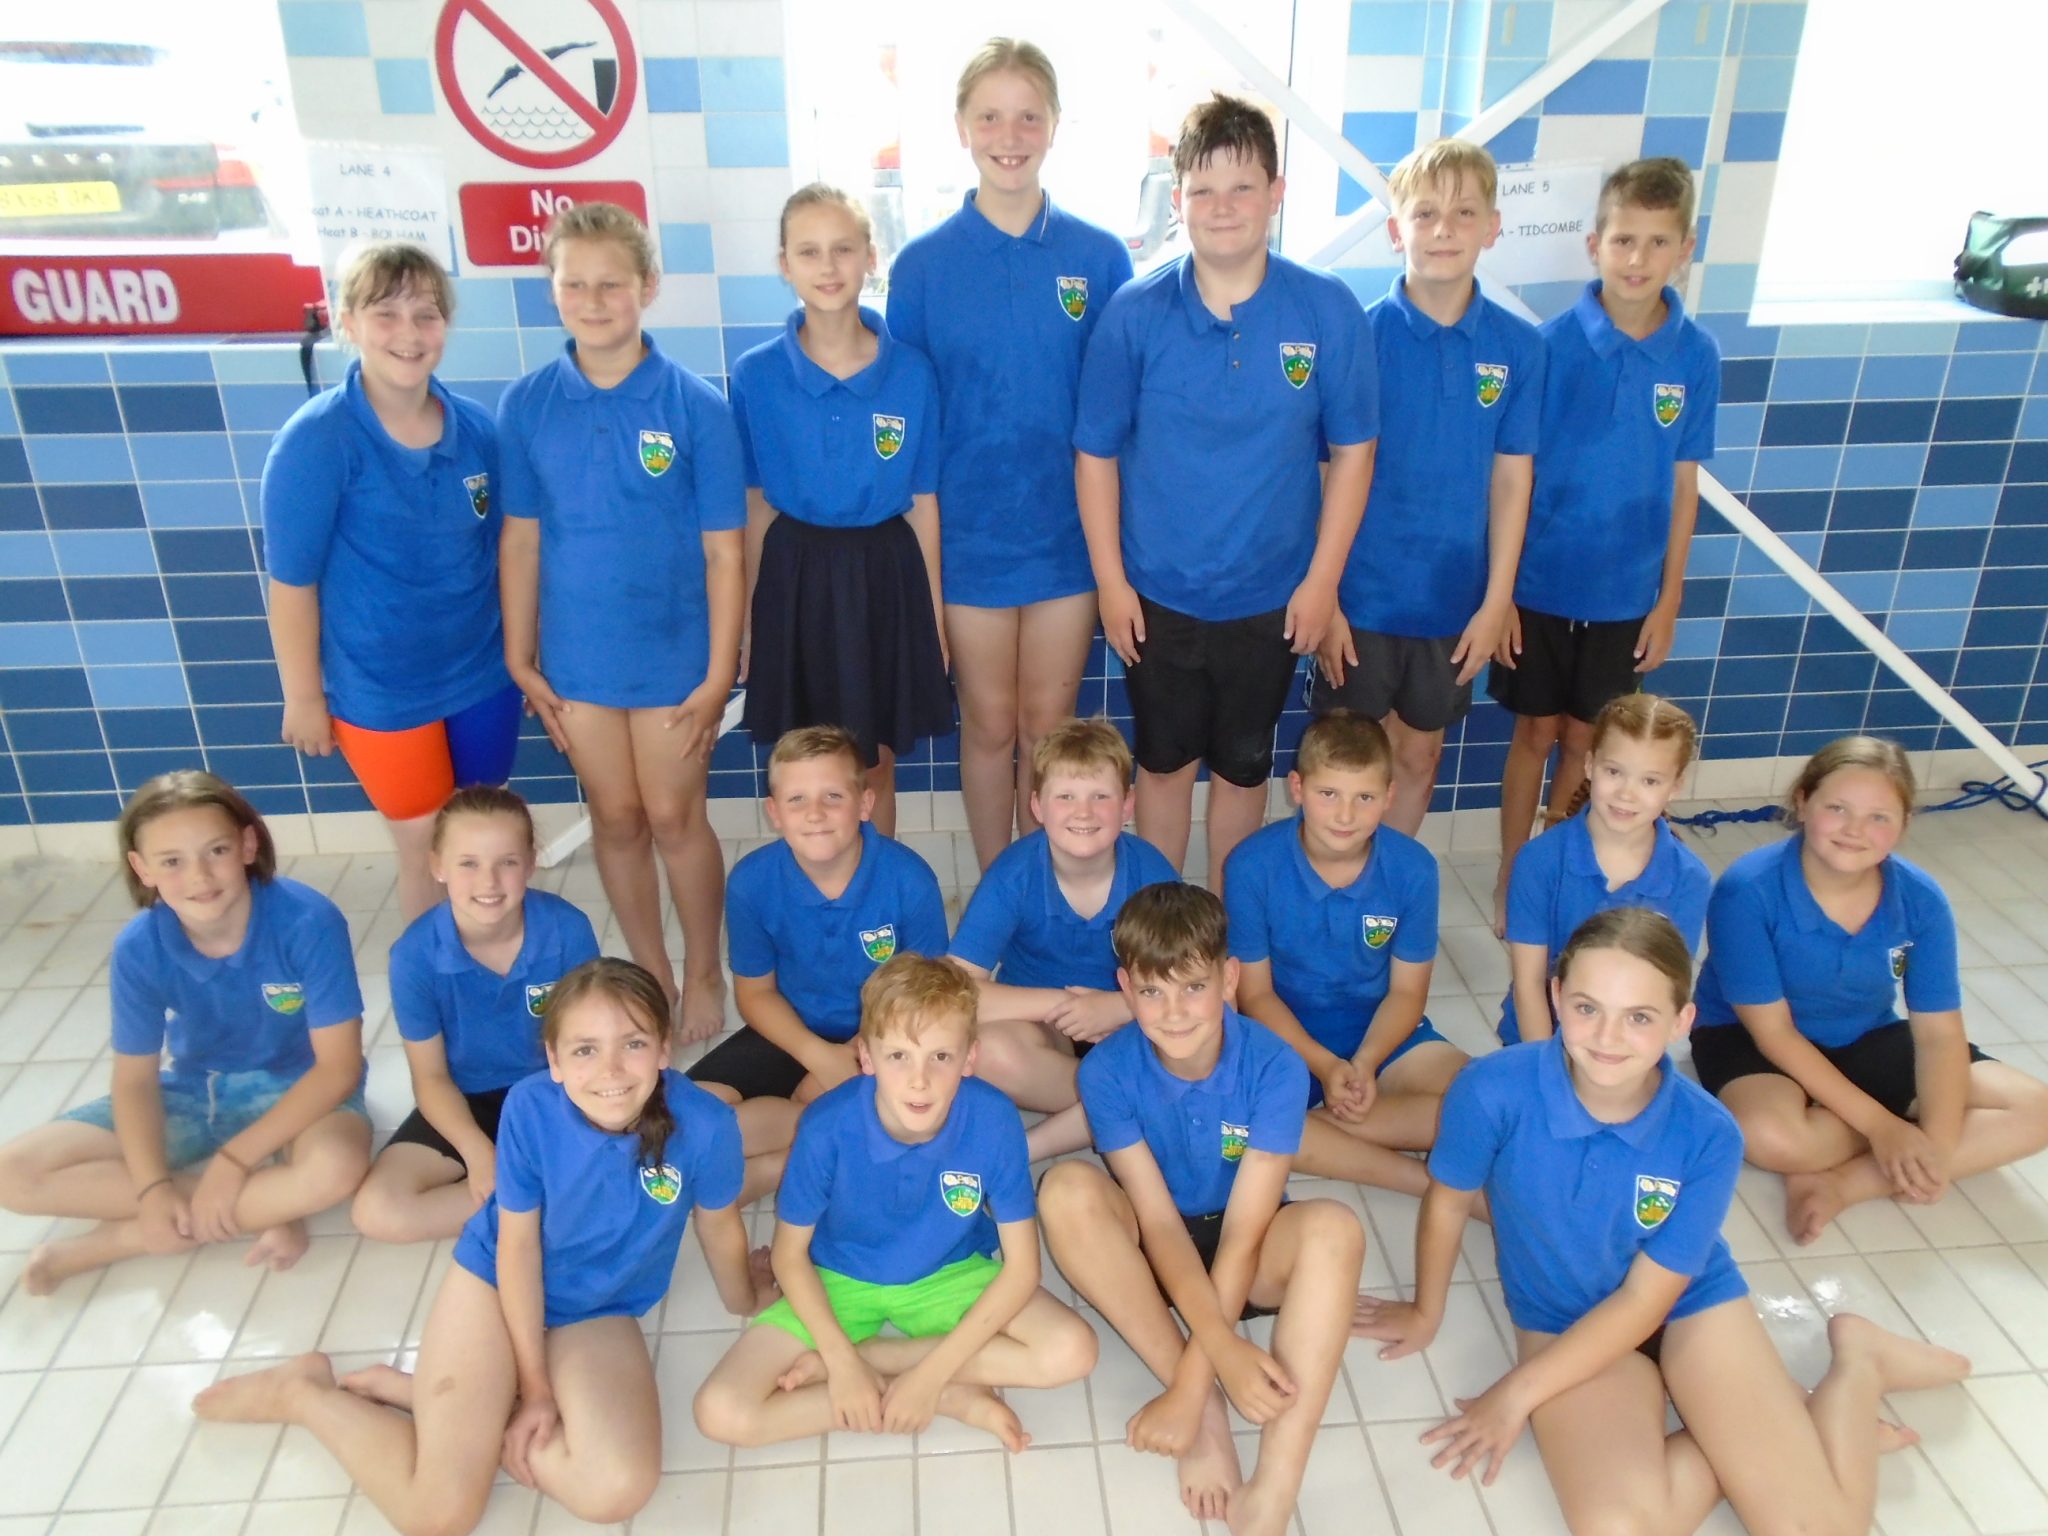 Schools swimming gala Heathcoat Primary School